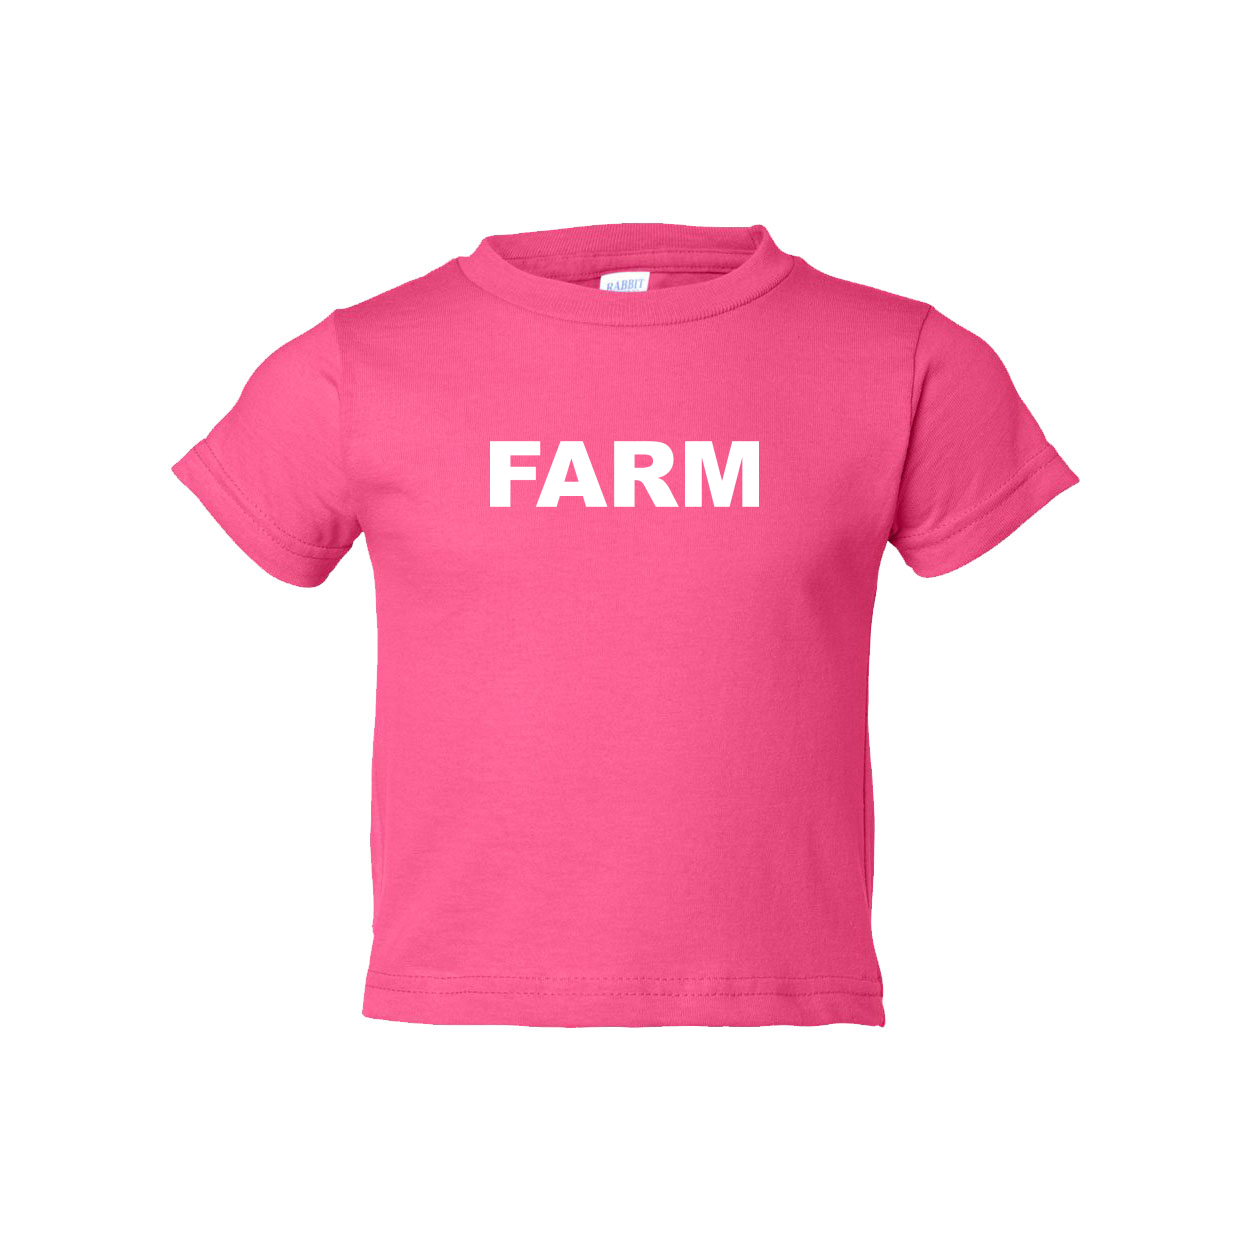 Farm Brand Logo Classic Toddler T-Shirt Pink